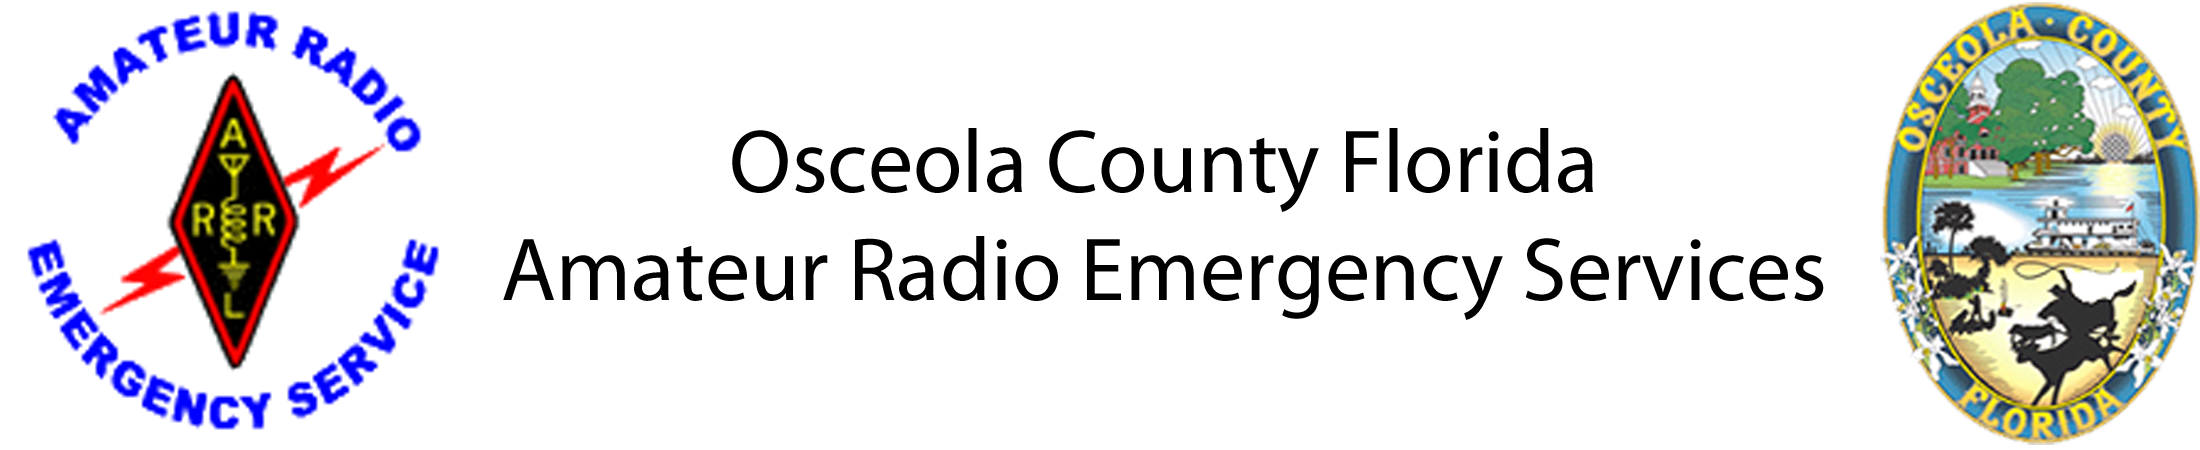 Osceola County Florida Amateur Radio Emergency Services